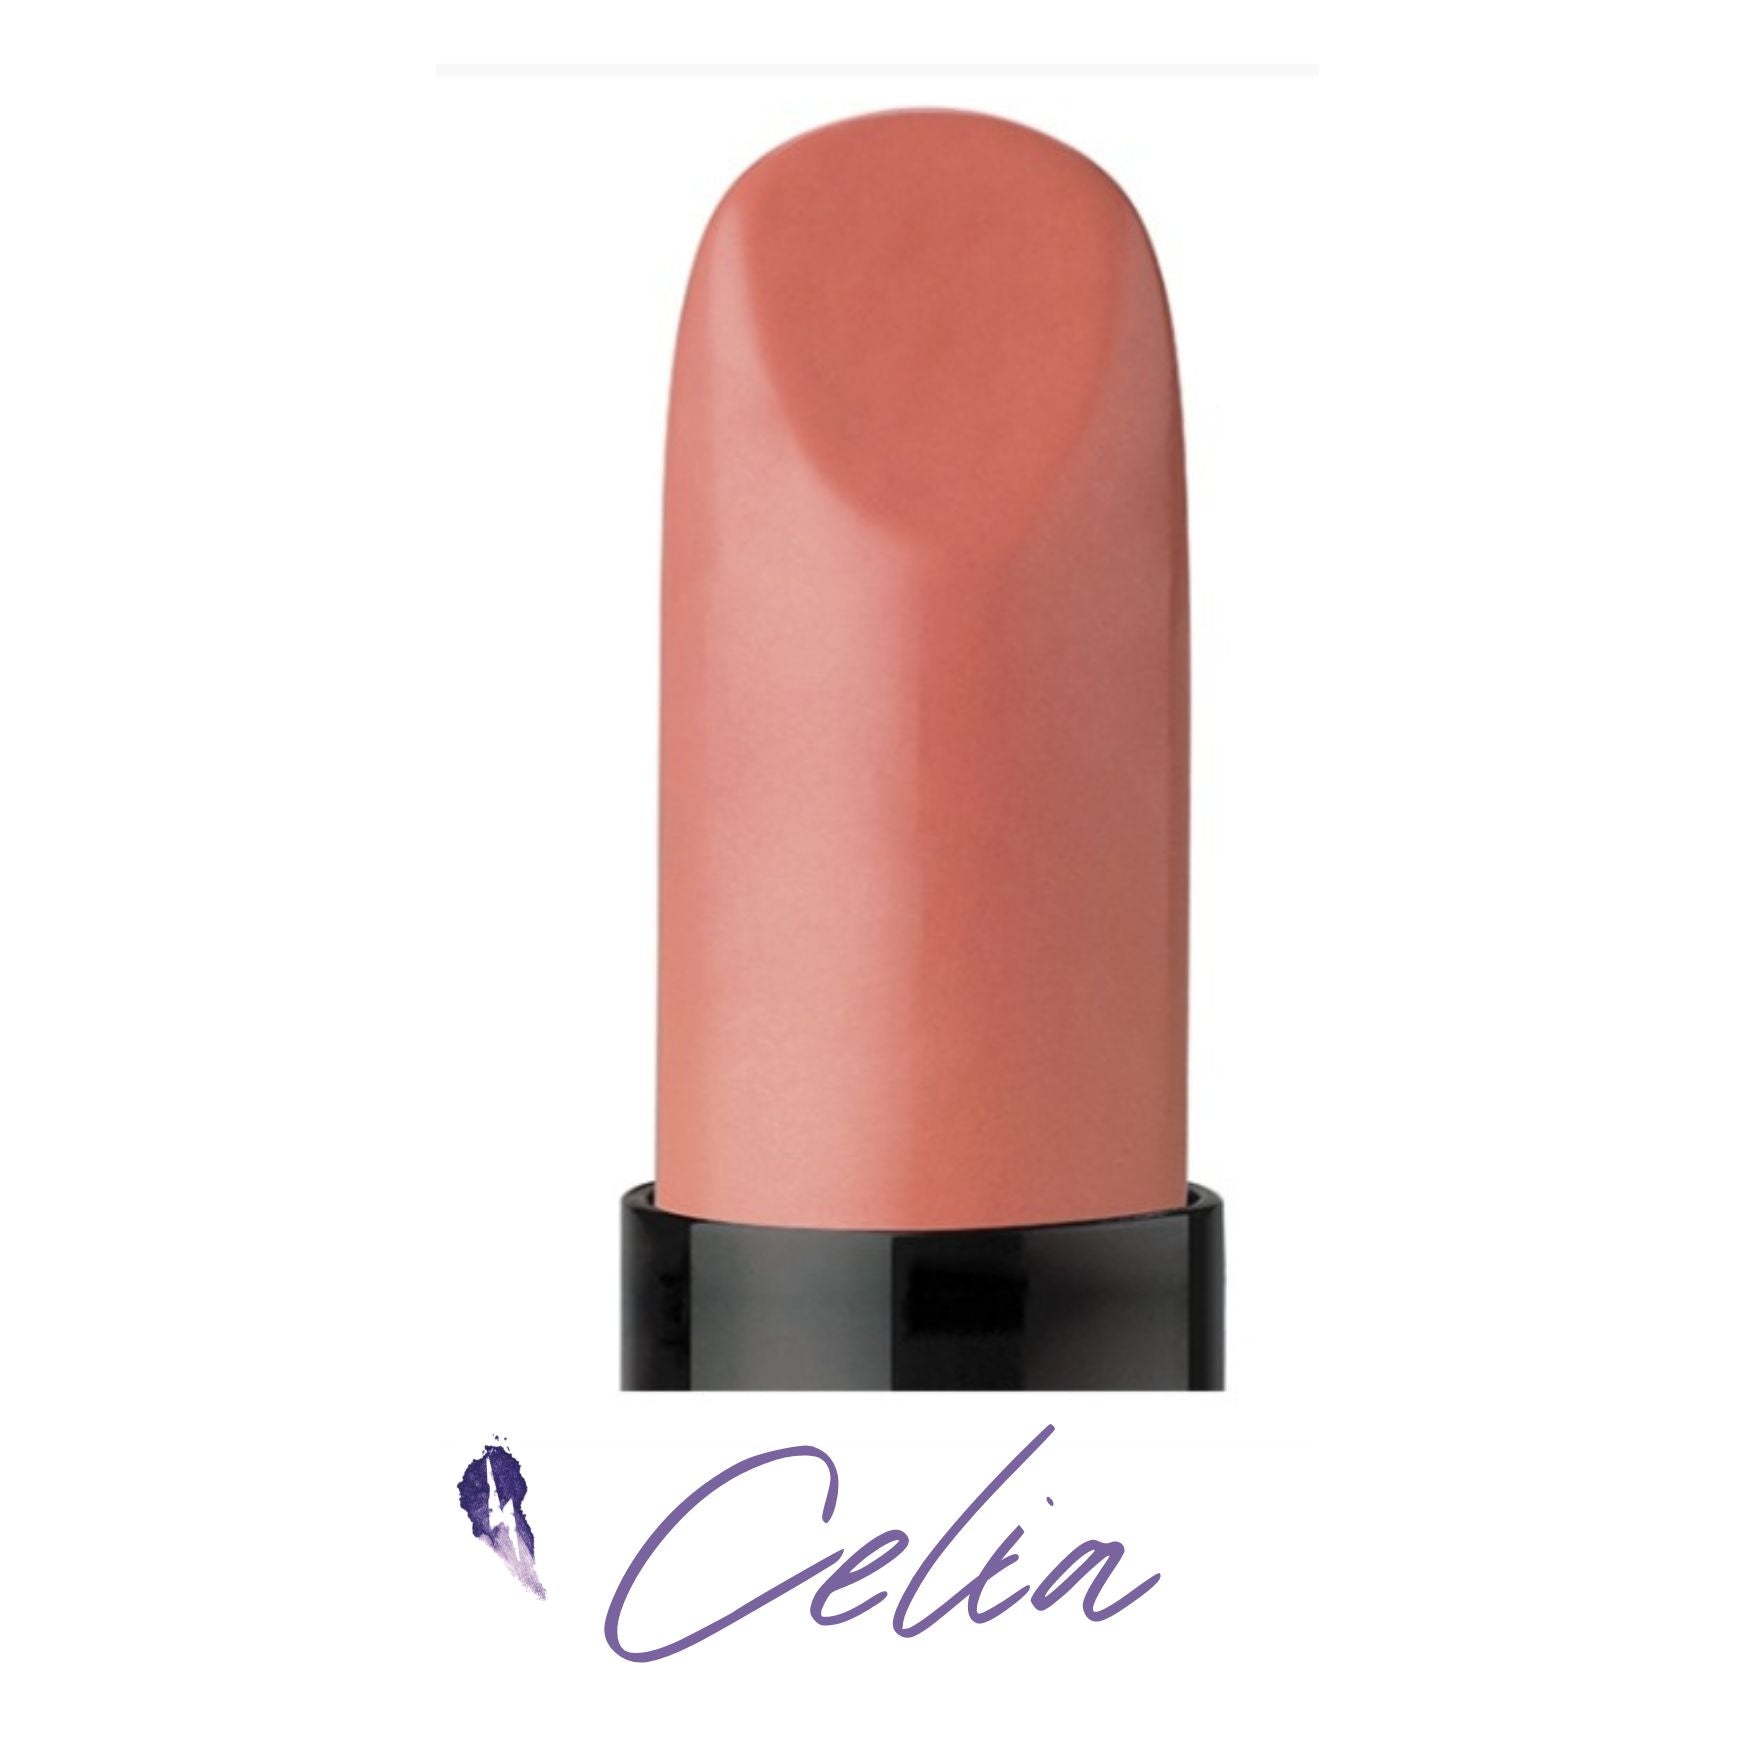 House of Tesla Celian Creme Lipstick 